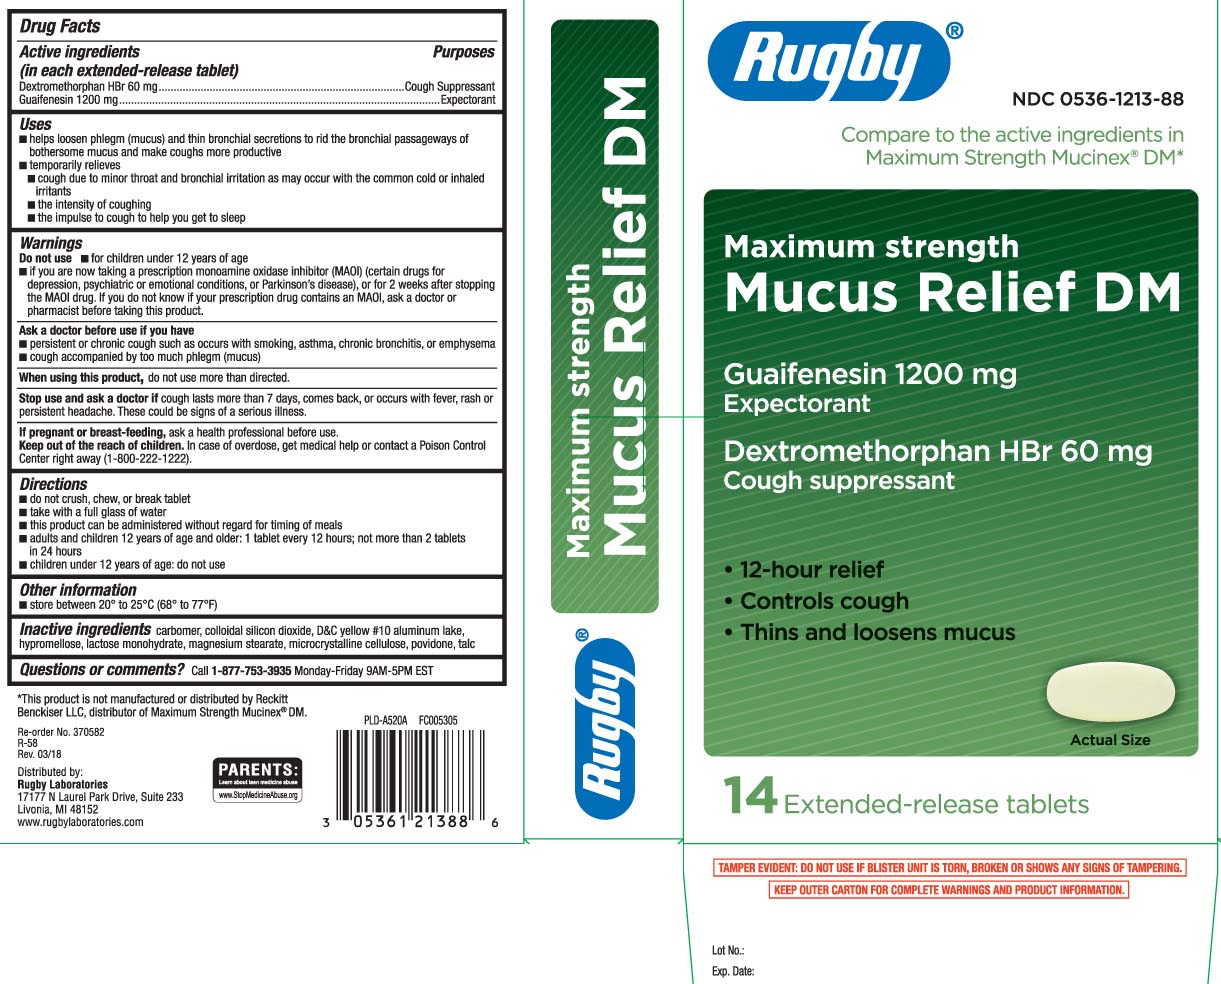 Dextromethorphan HBr 60 mg, Guaifenesin 1200 mg